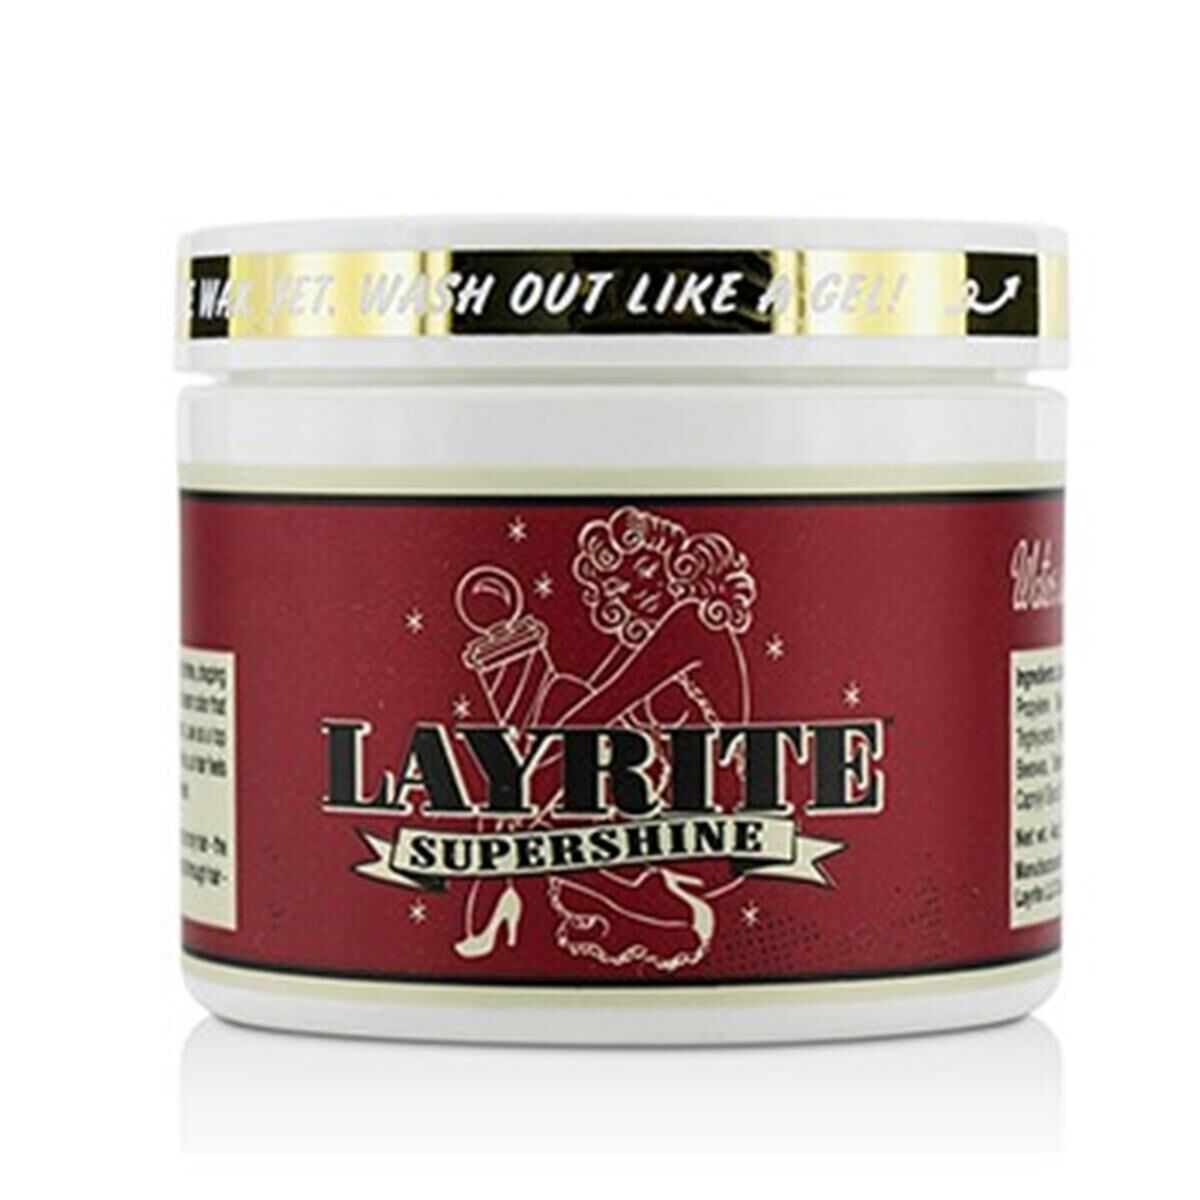 Layrite 213005 4.25 oz Supershine Cream - Medium Hold, High Shine & Water Soluble One Size